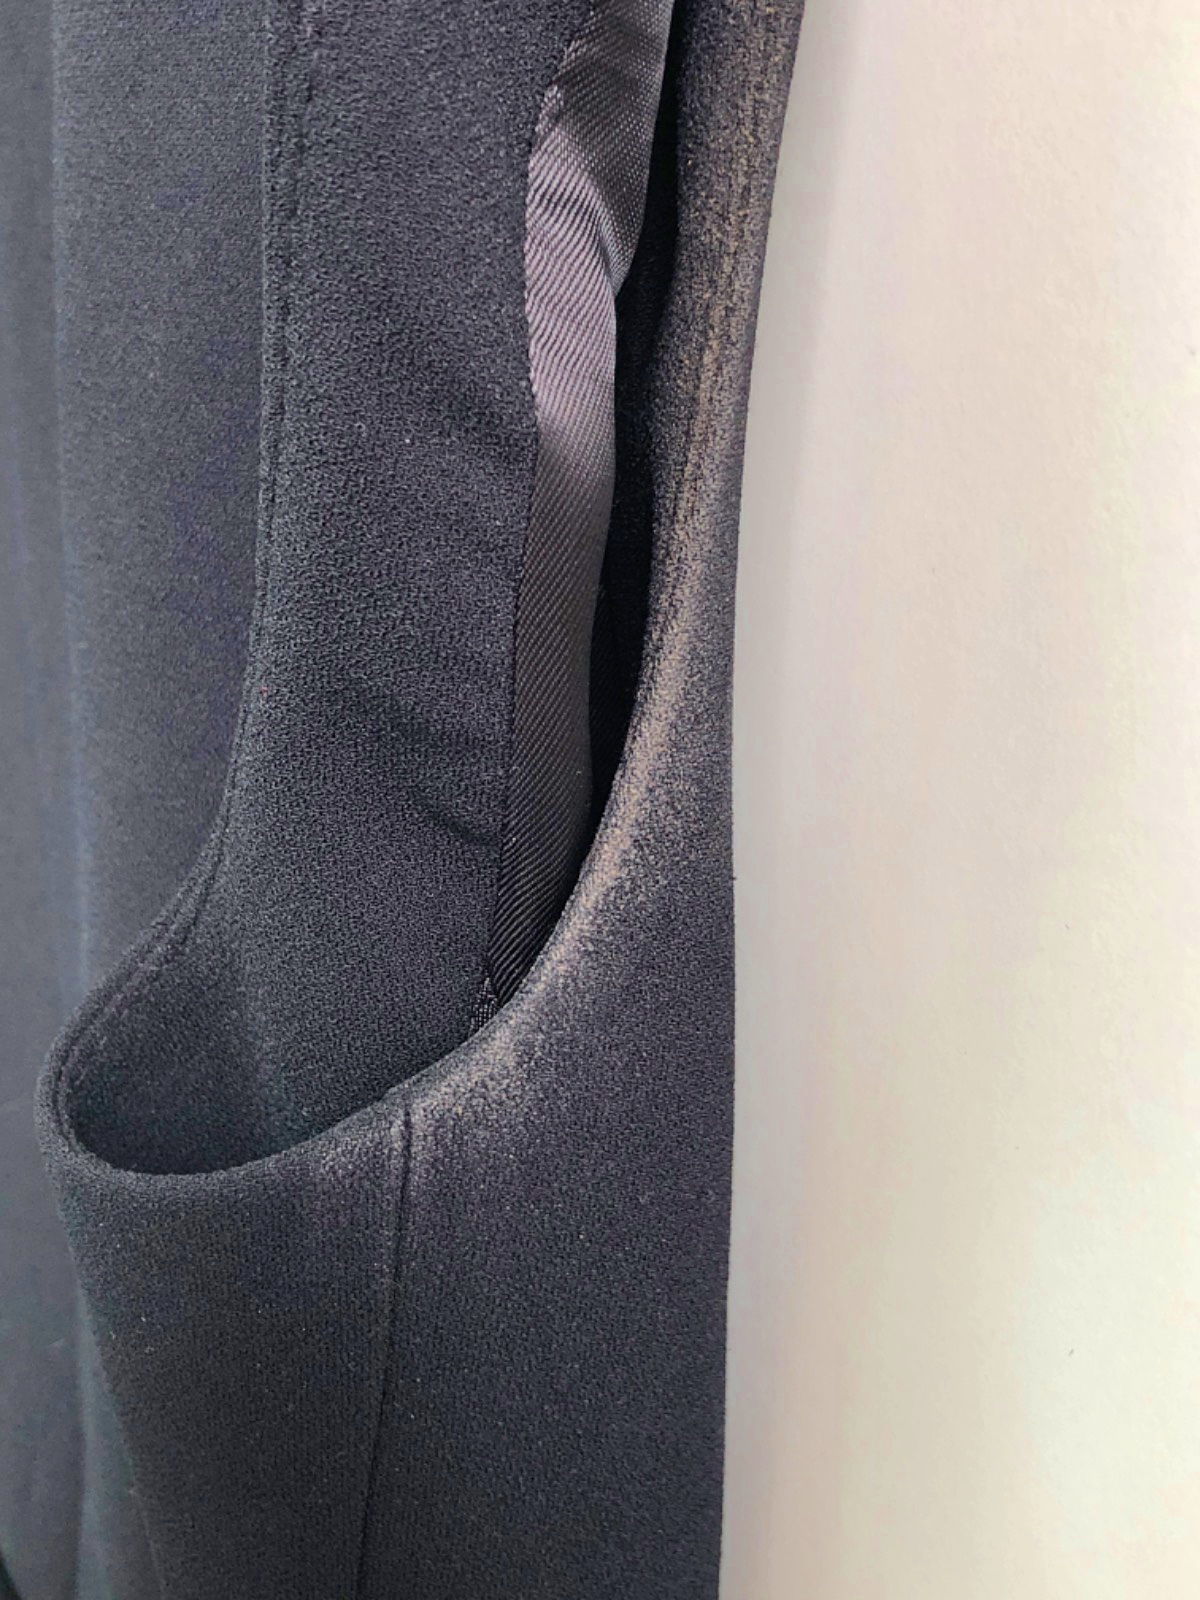 Zara Black Sleeveless Blazer with Belt EUR S